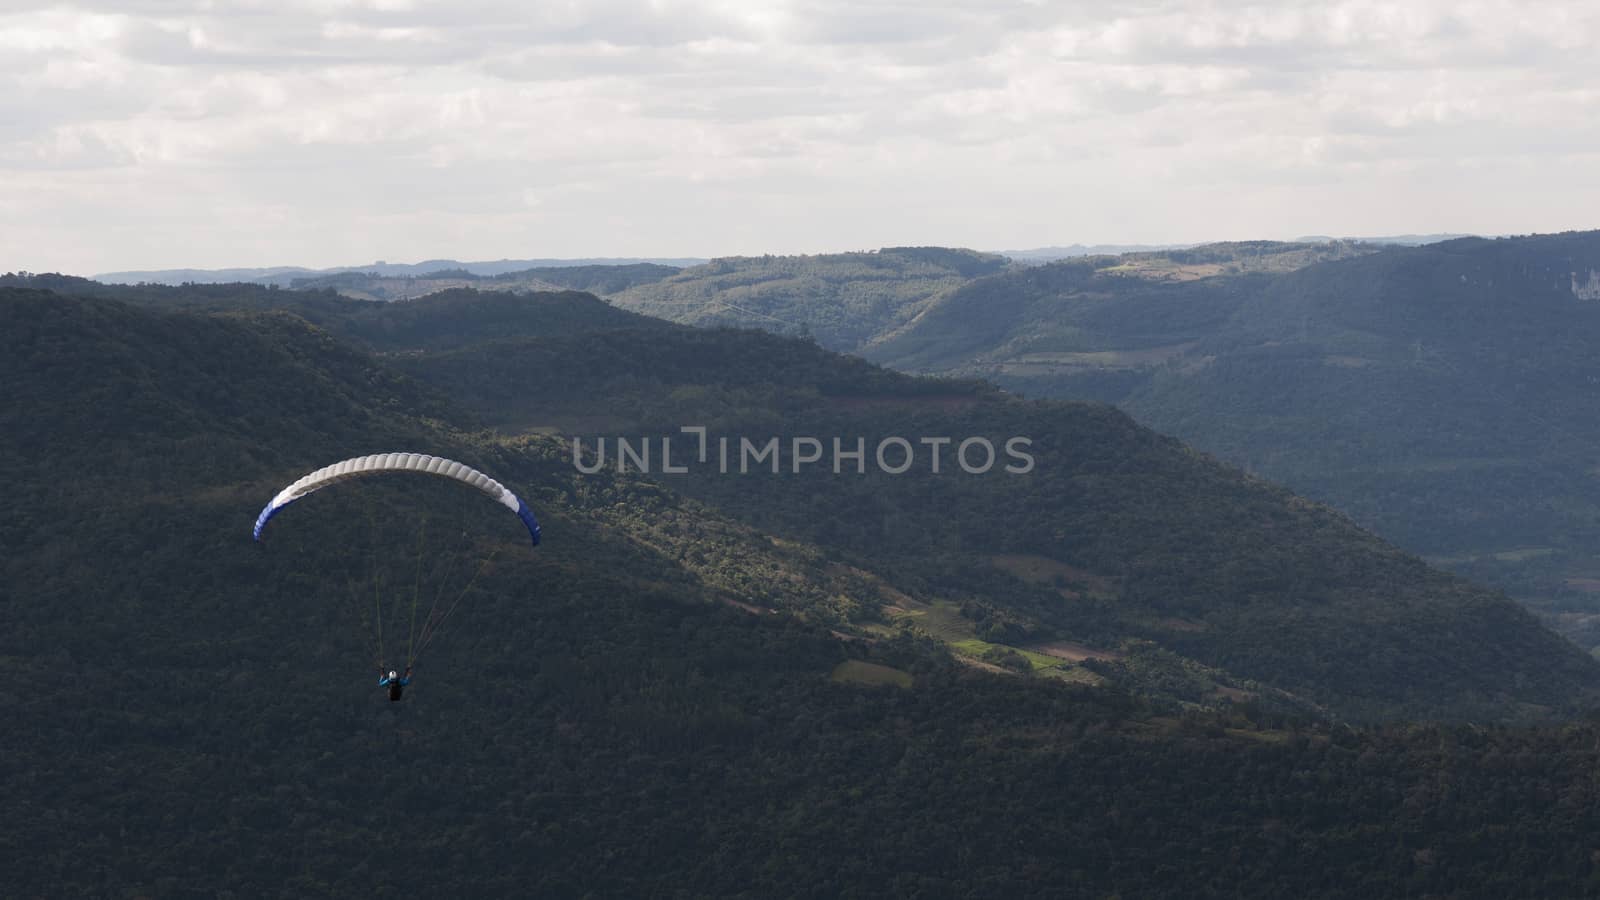 Free-Flying on Paragliding at Rio Grande do Sul, Brazil by rodrigobellizzi